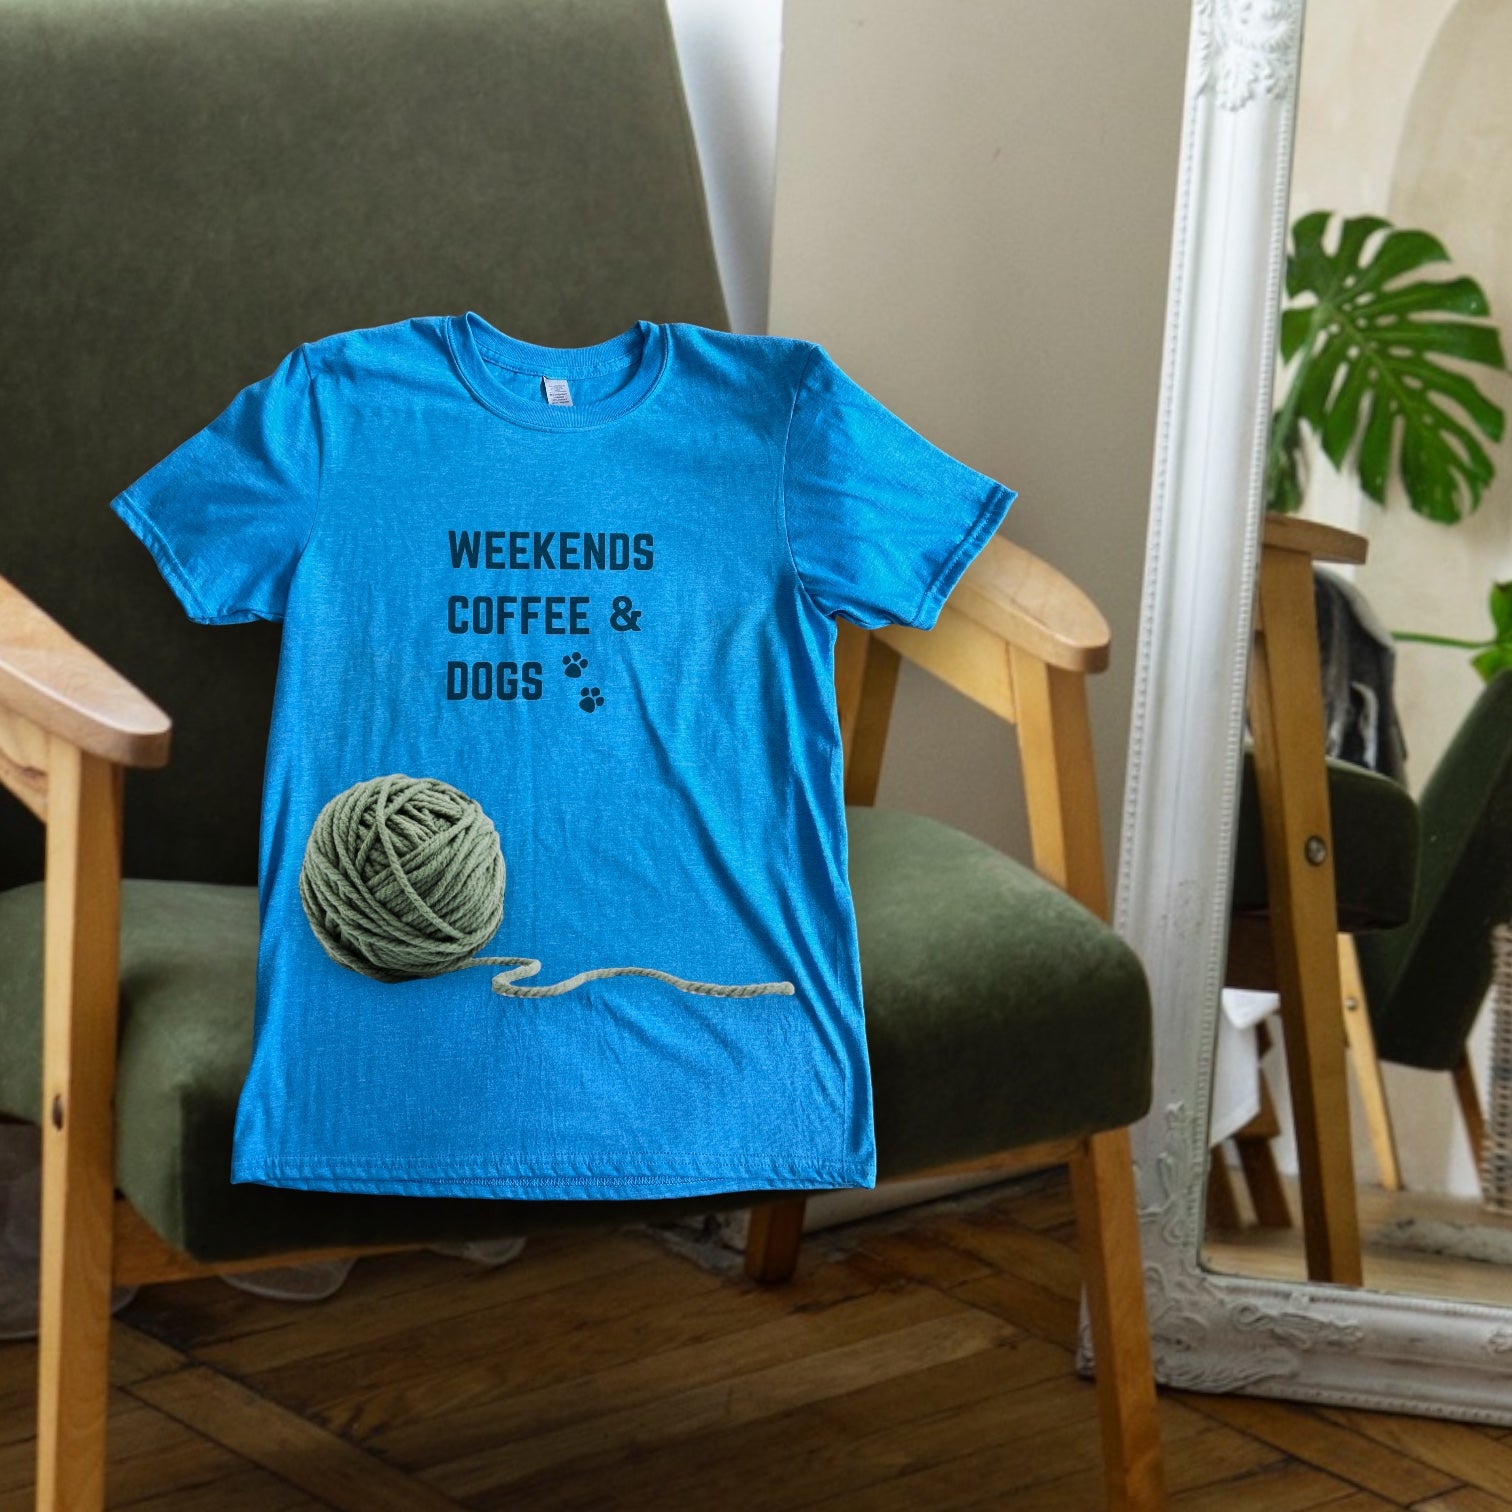 🐶☕ "Weekends, Coffee, & Dogs" T-Shirt 🌞👕 - Size Medium